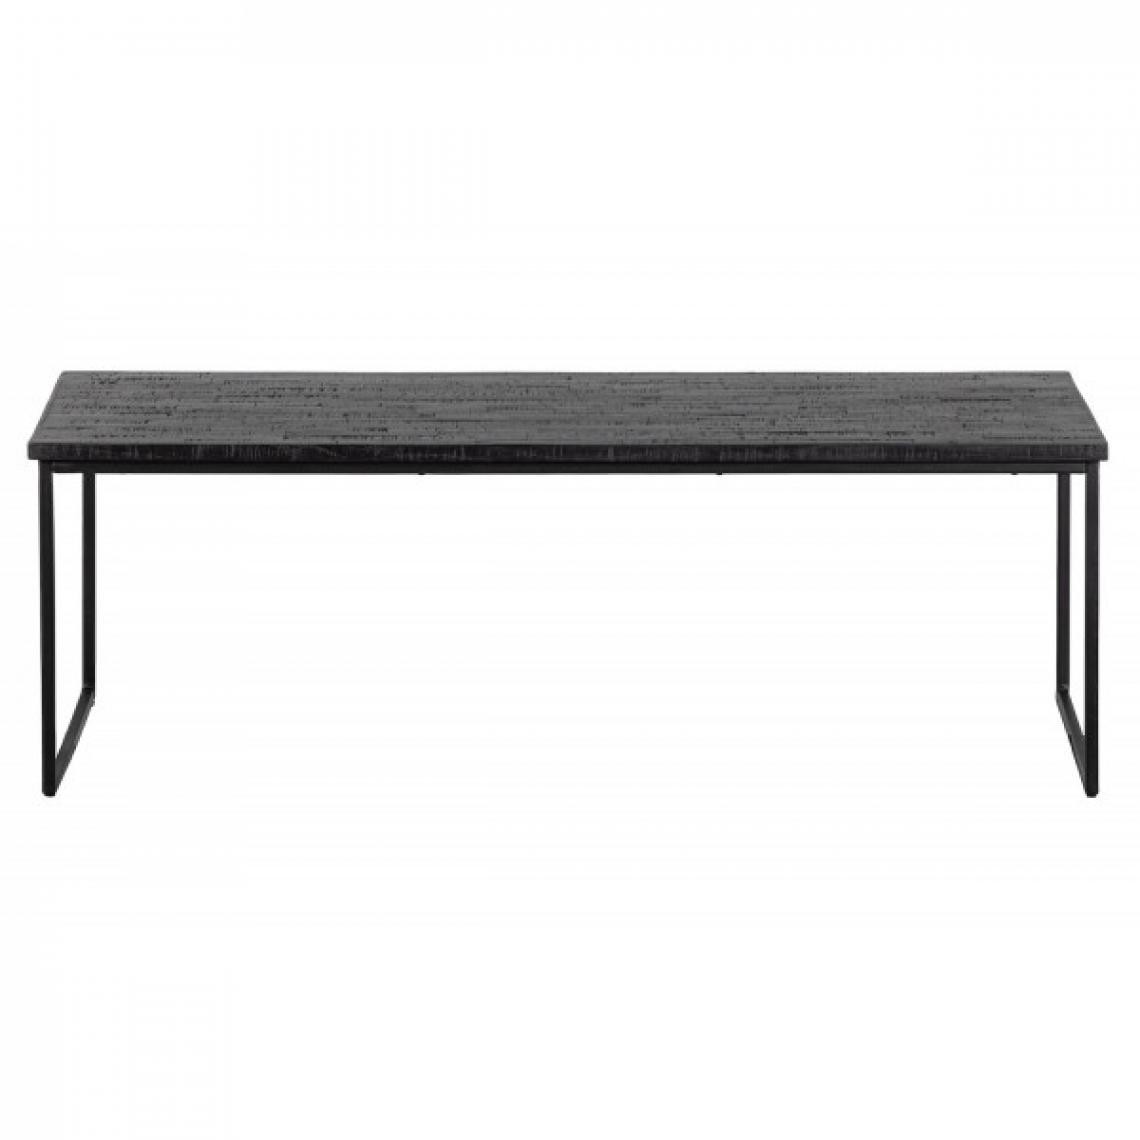 Bepurehome - SHARING - Table basse en bois noir L120 - Tables basses